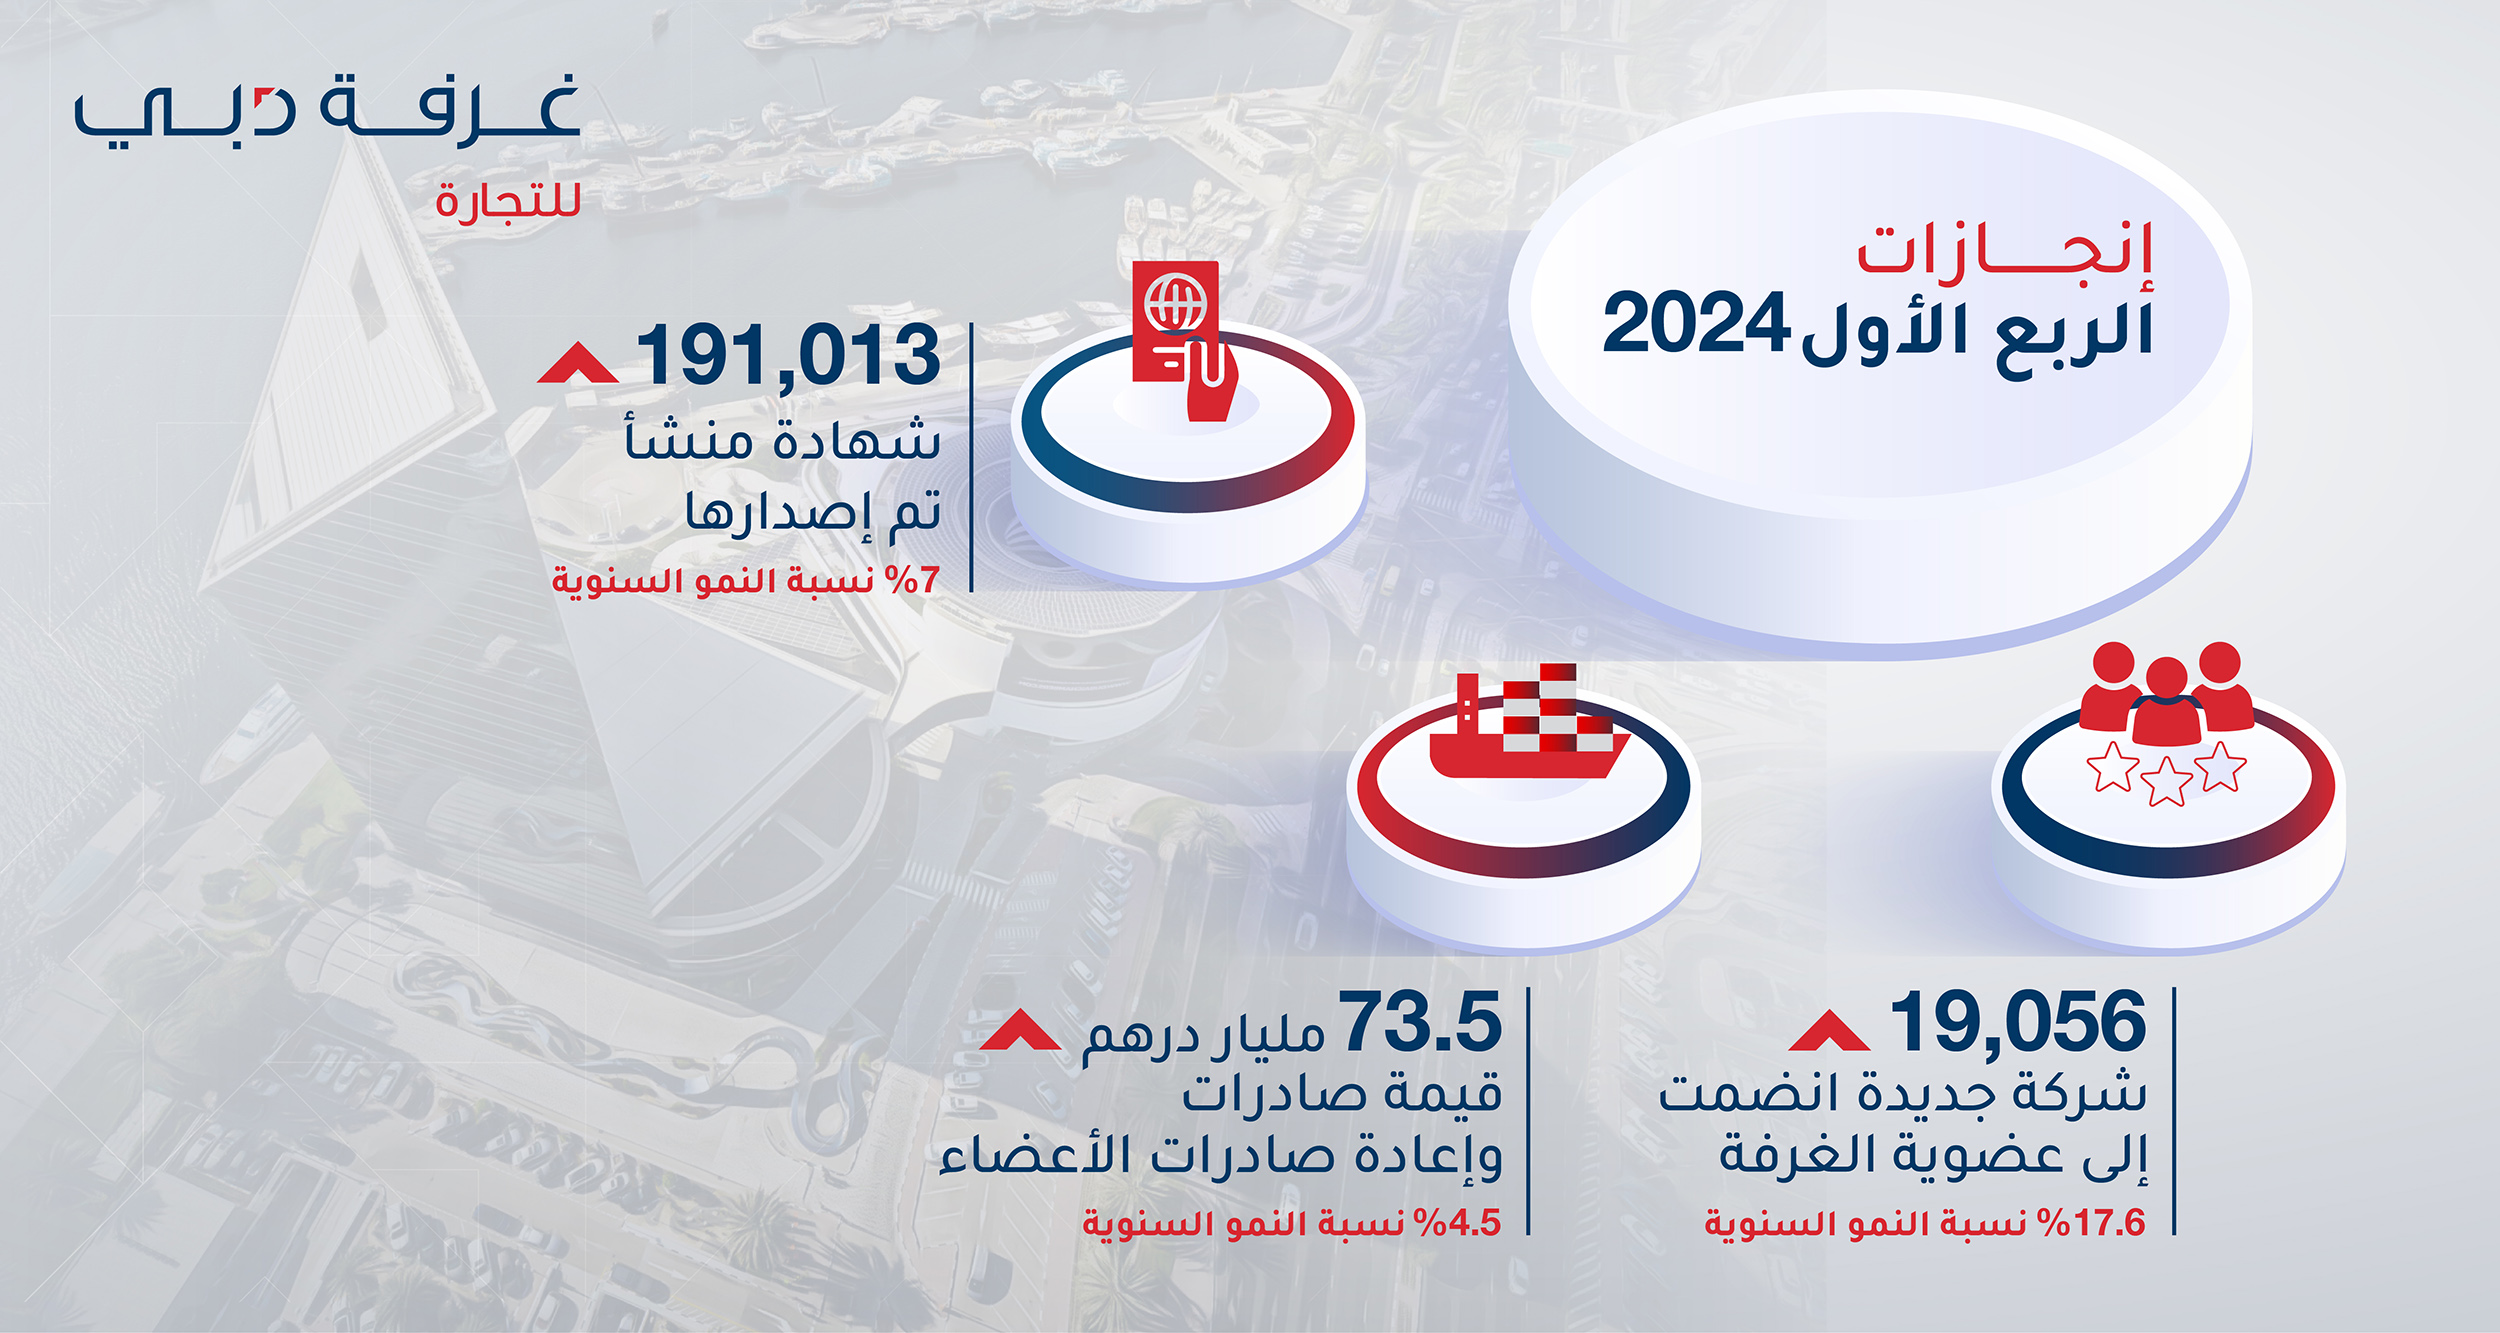 Infographic  Dubai Chamber commerce H1 2023 Achievements